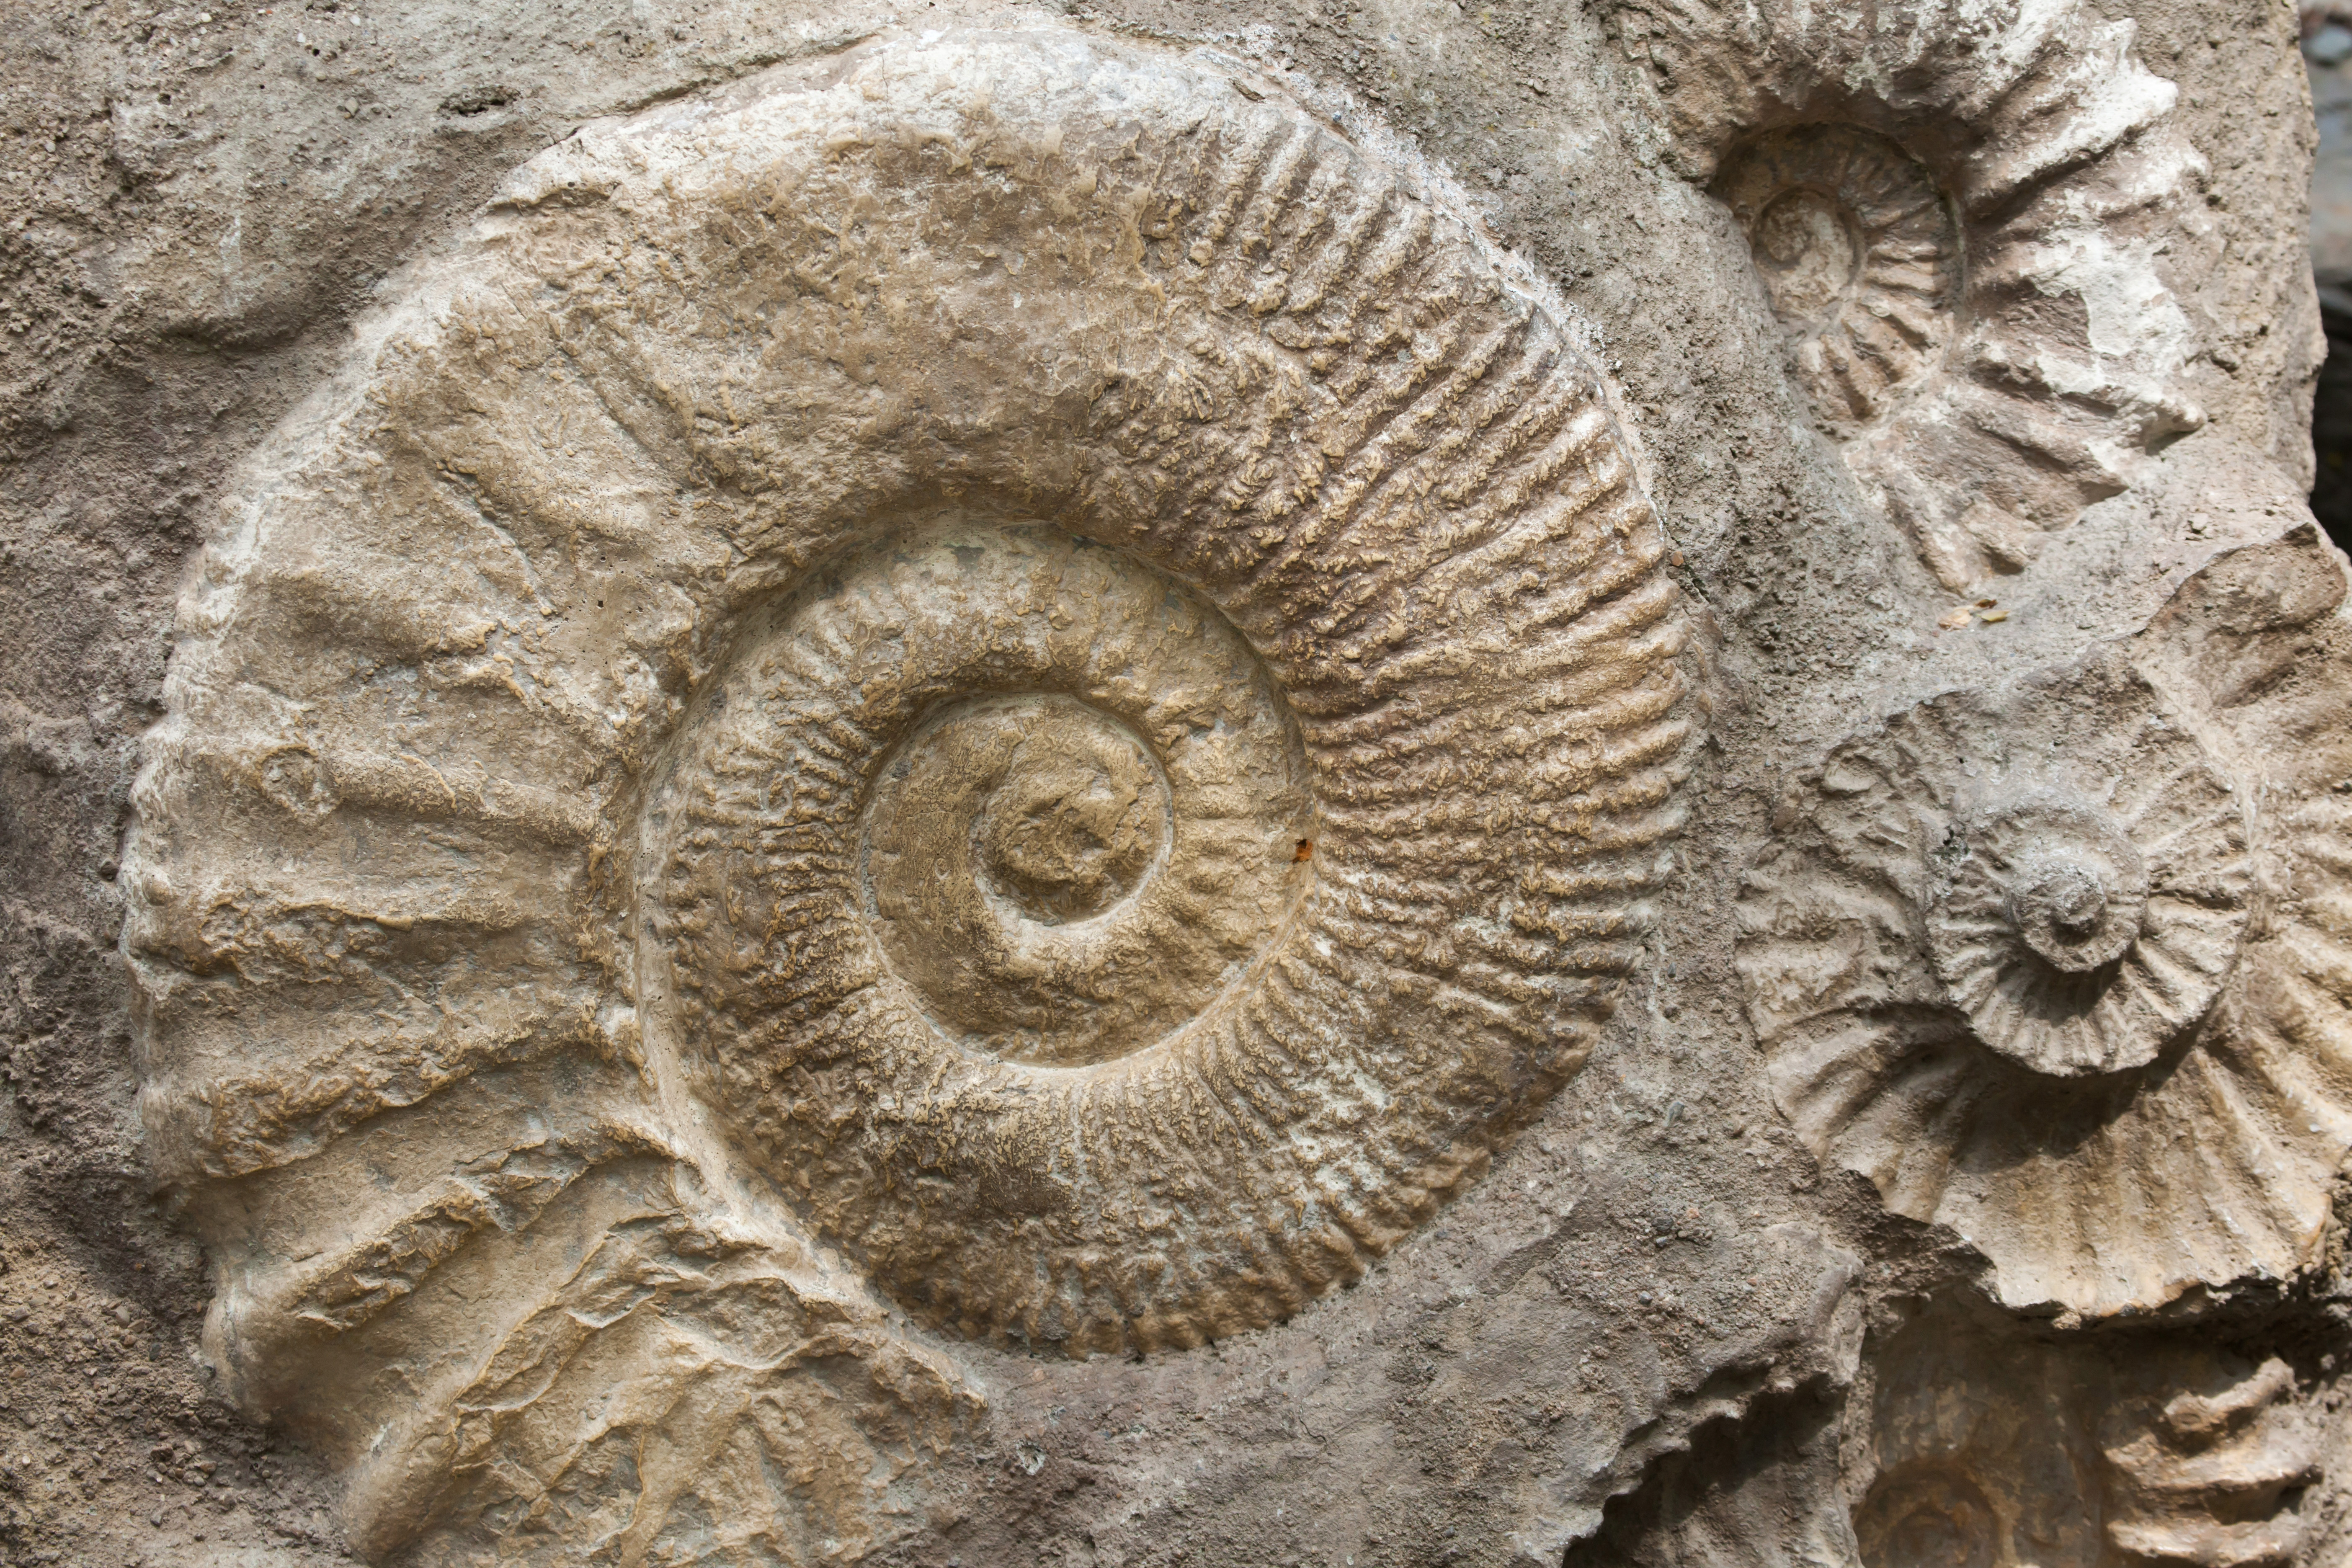 Ammonite fossil image
